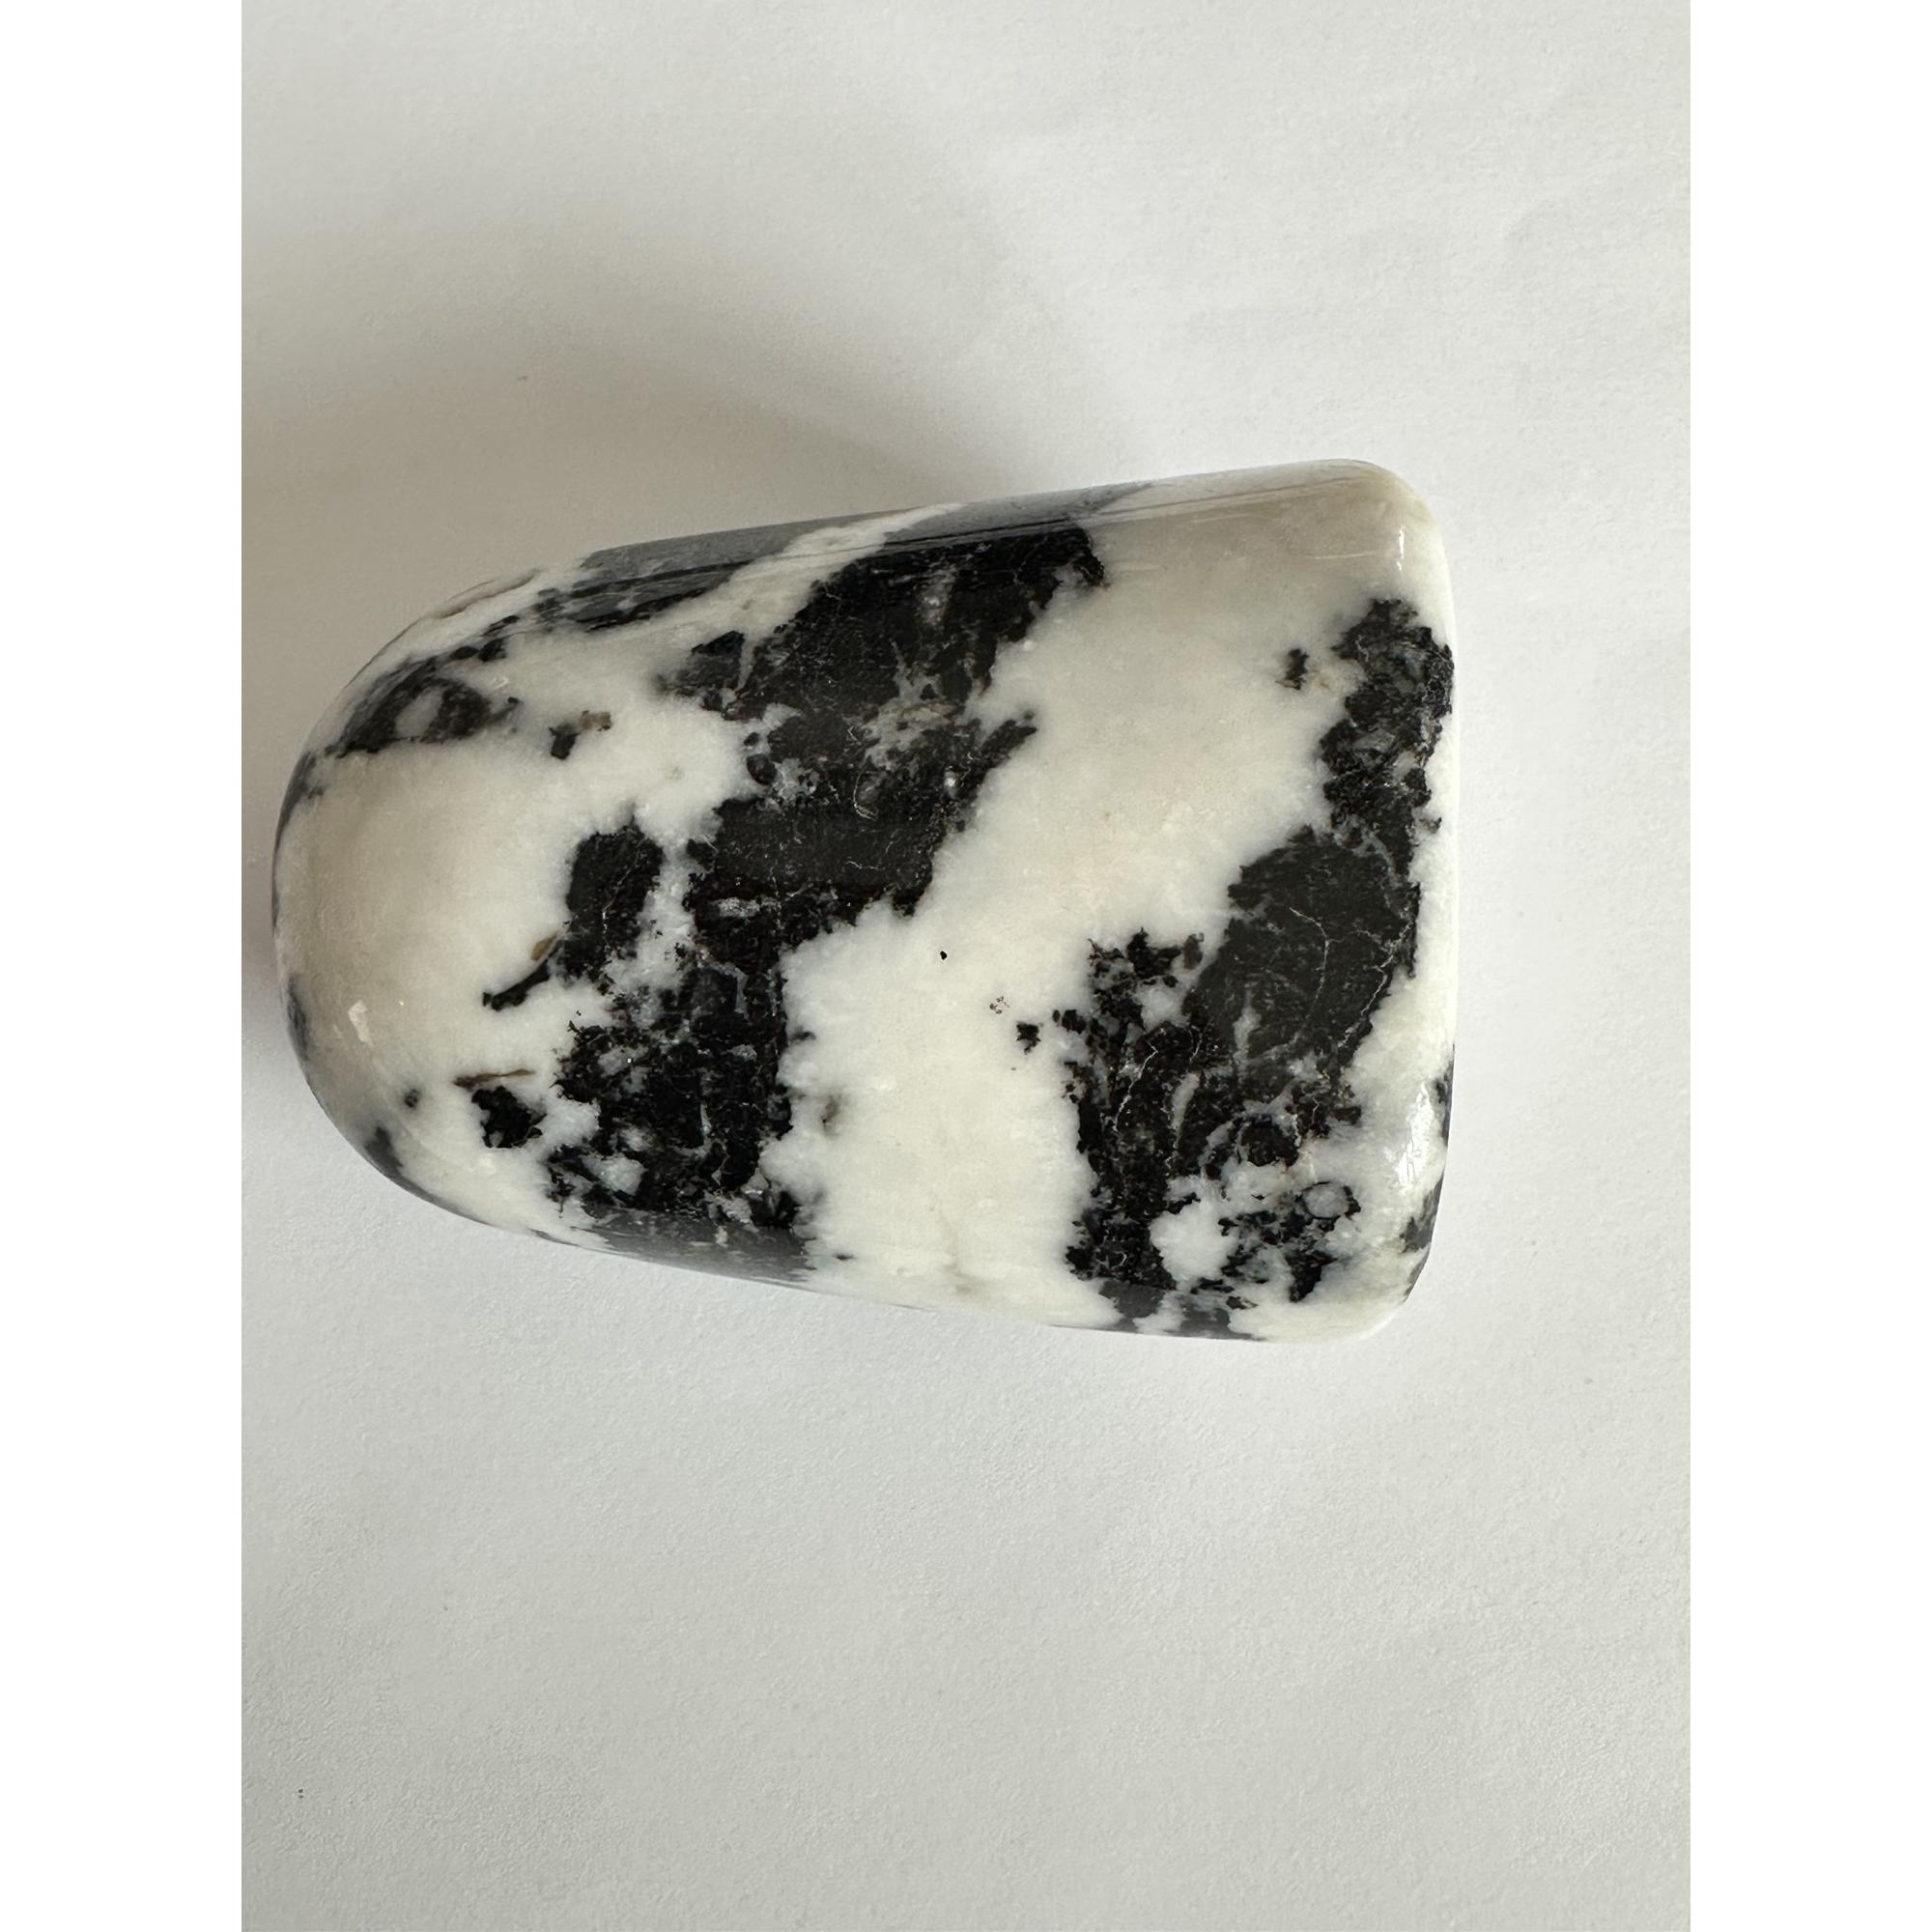 Zebra Stone Jasper mineral Prehistoric Online